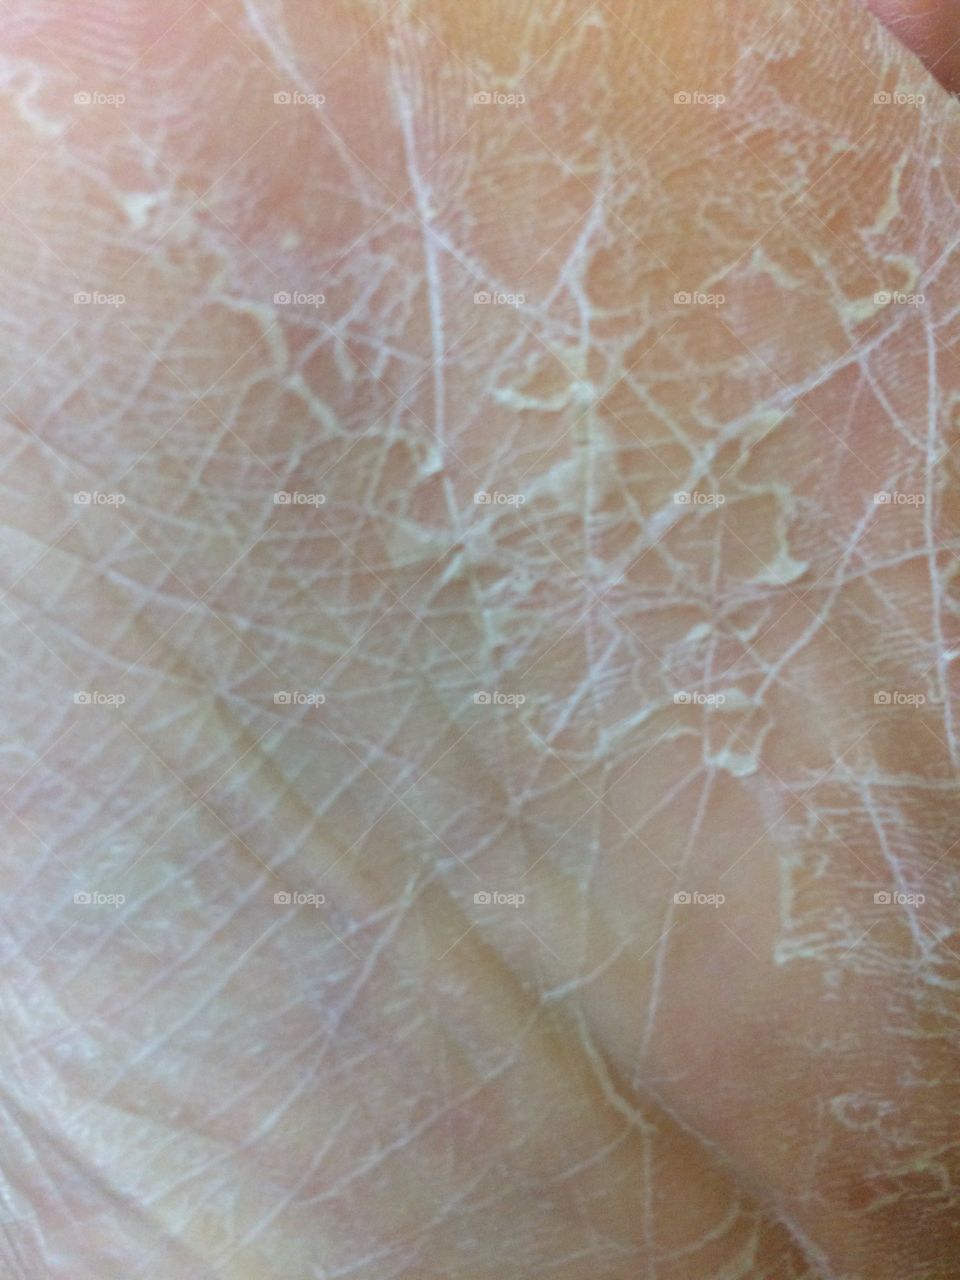 Crackle skin